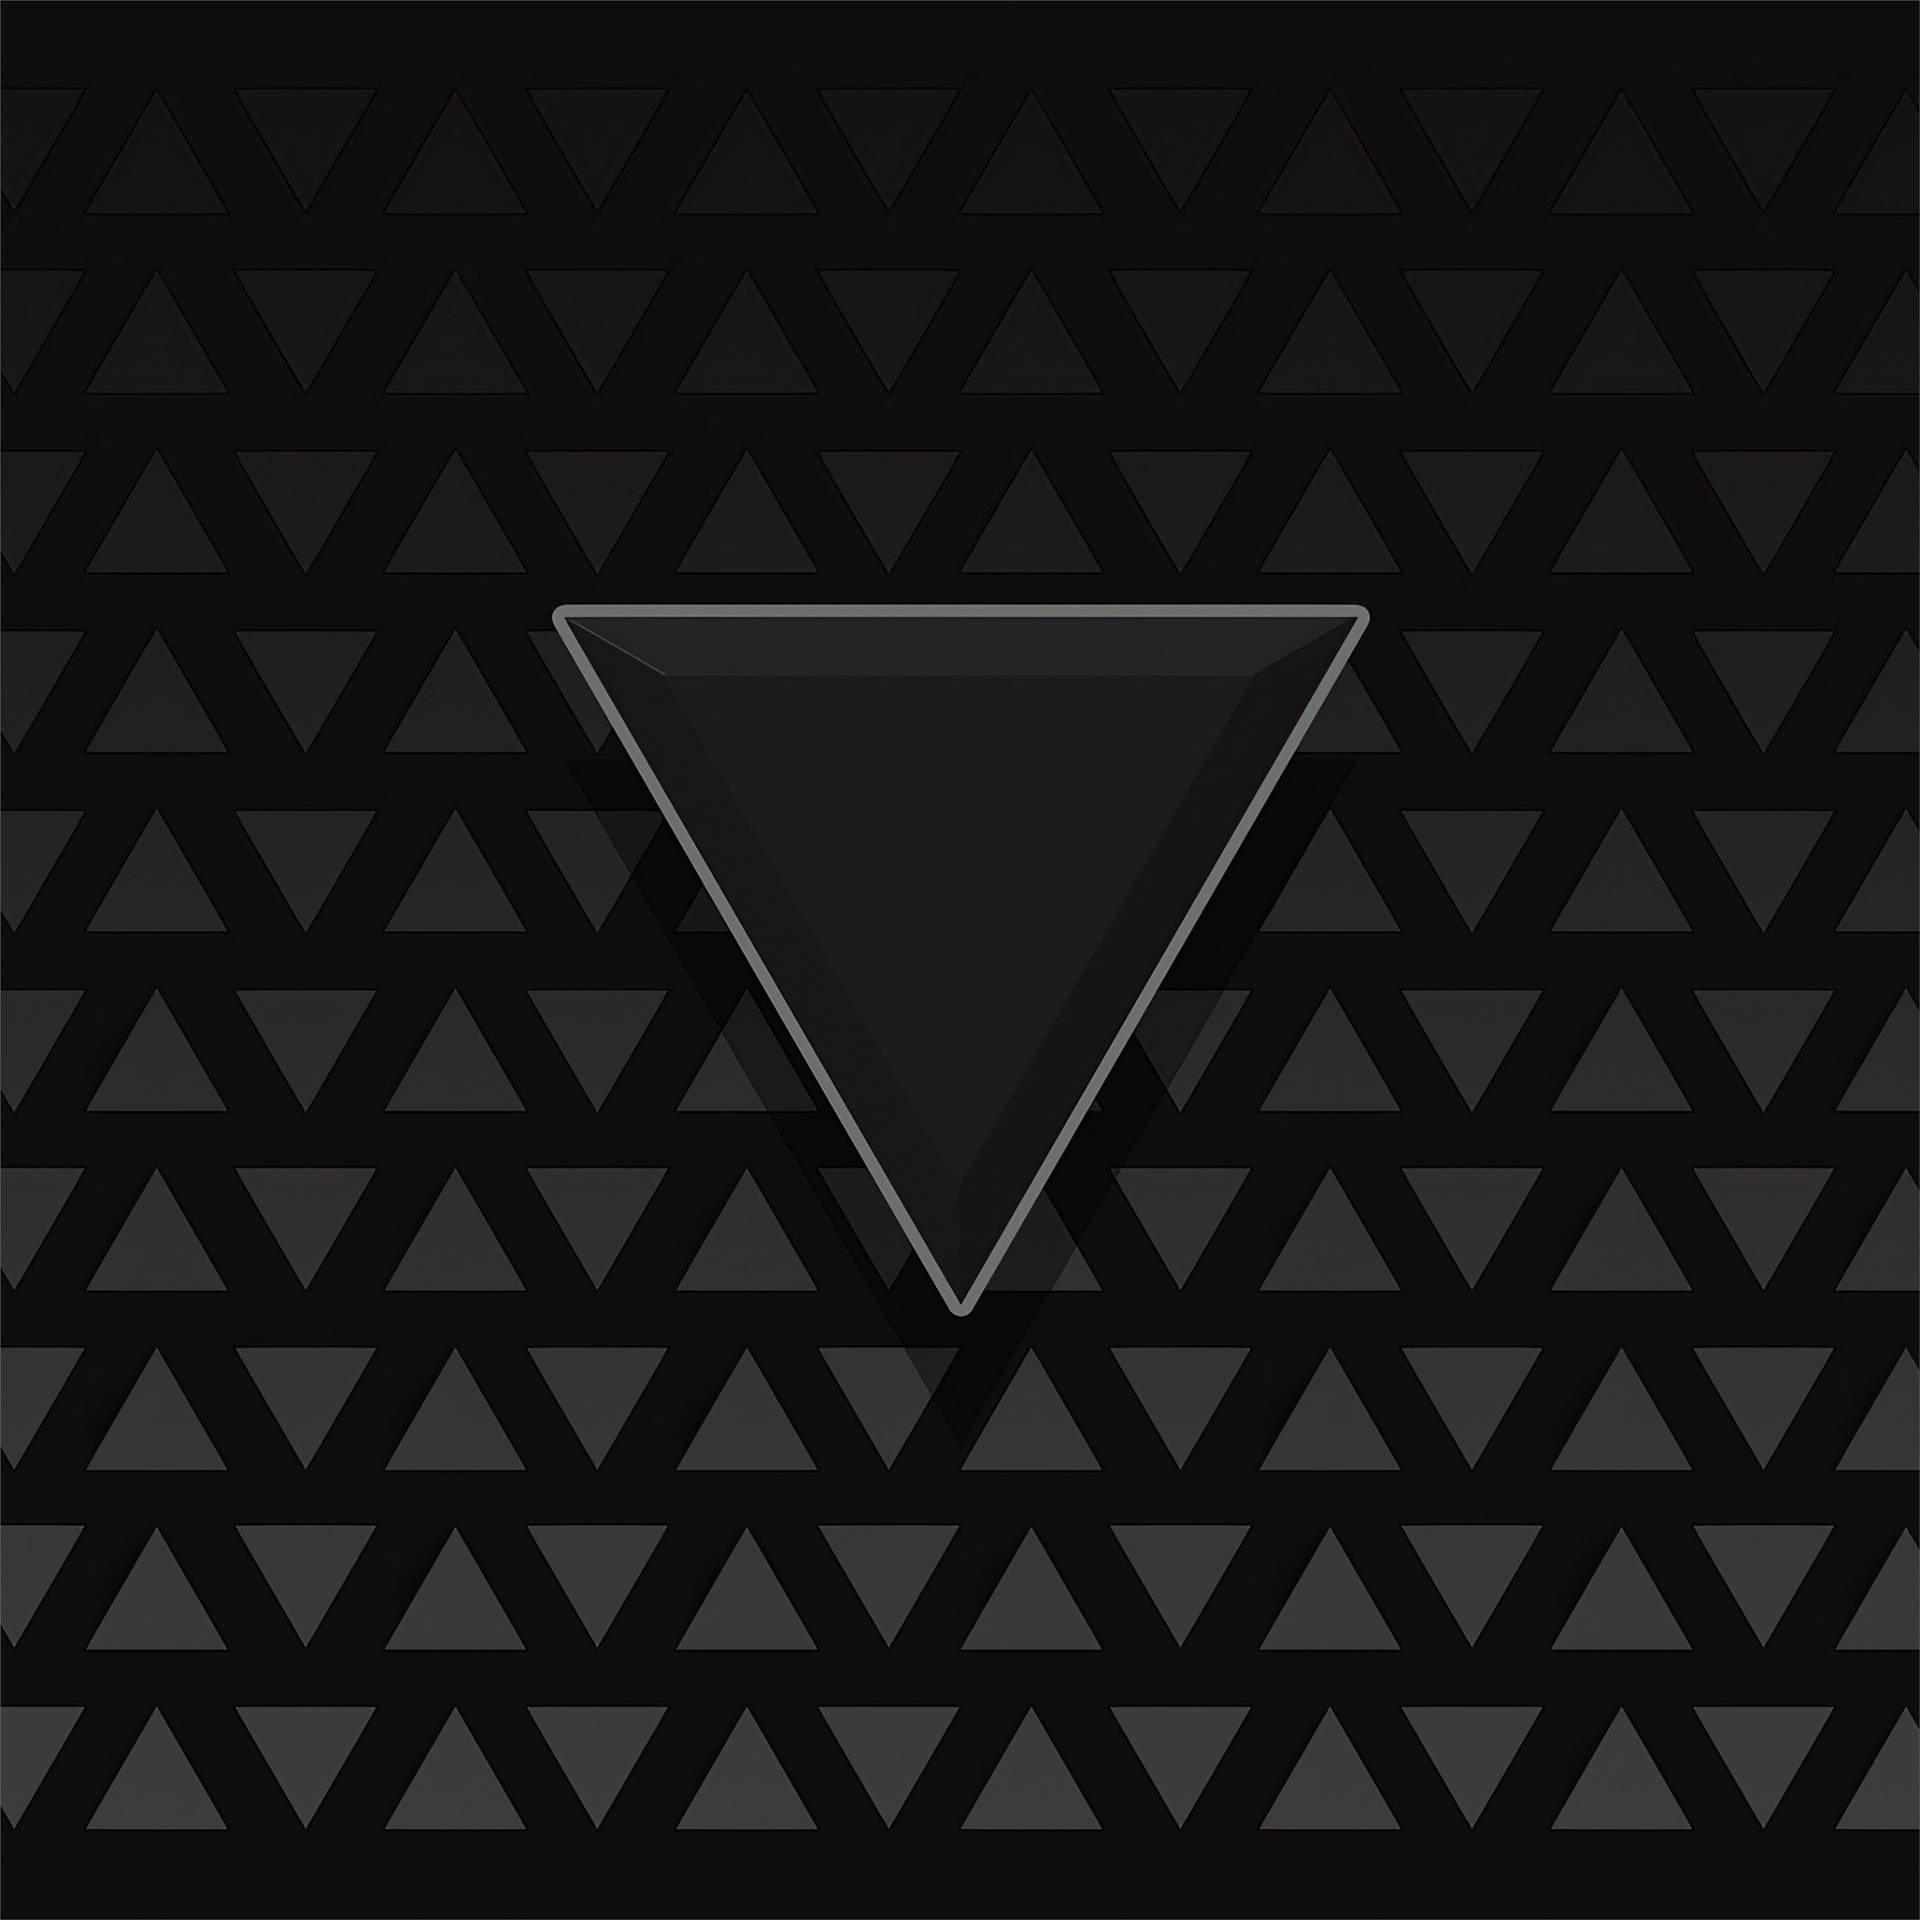 Inverted Black Pyramid Background